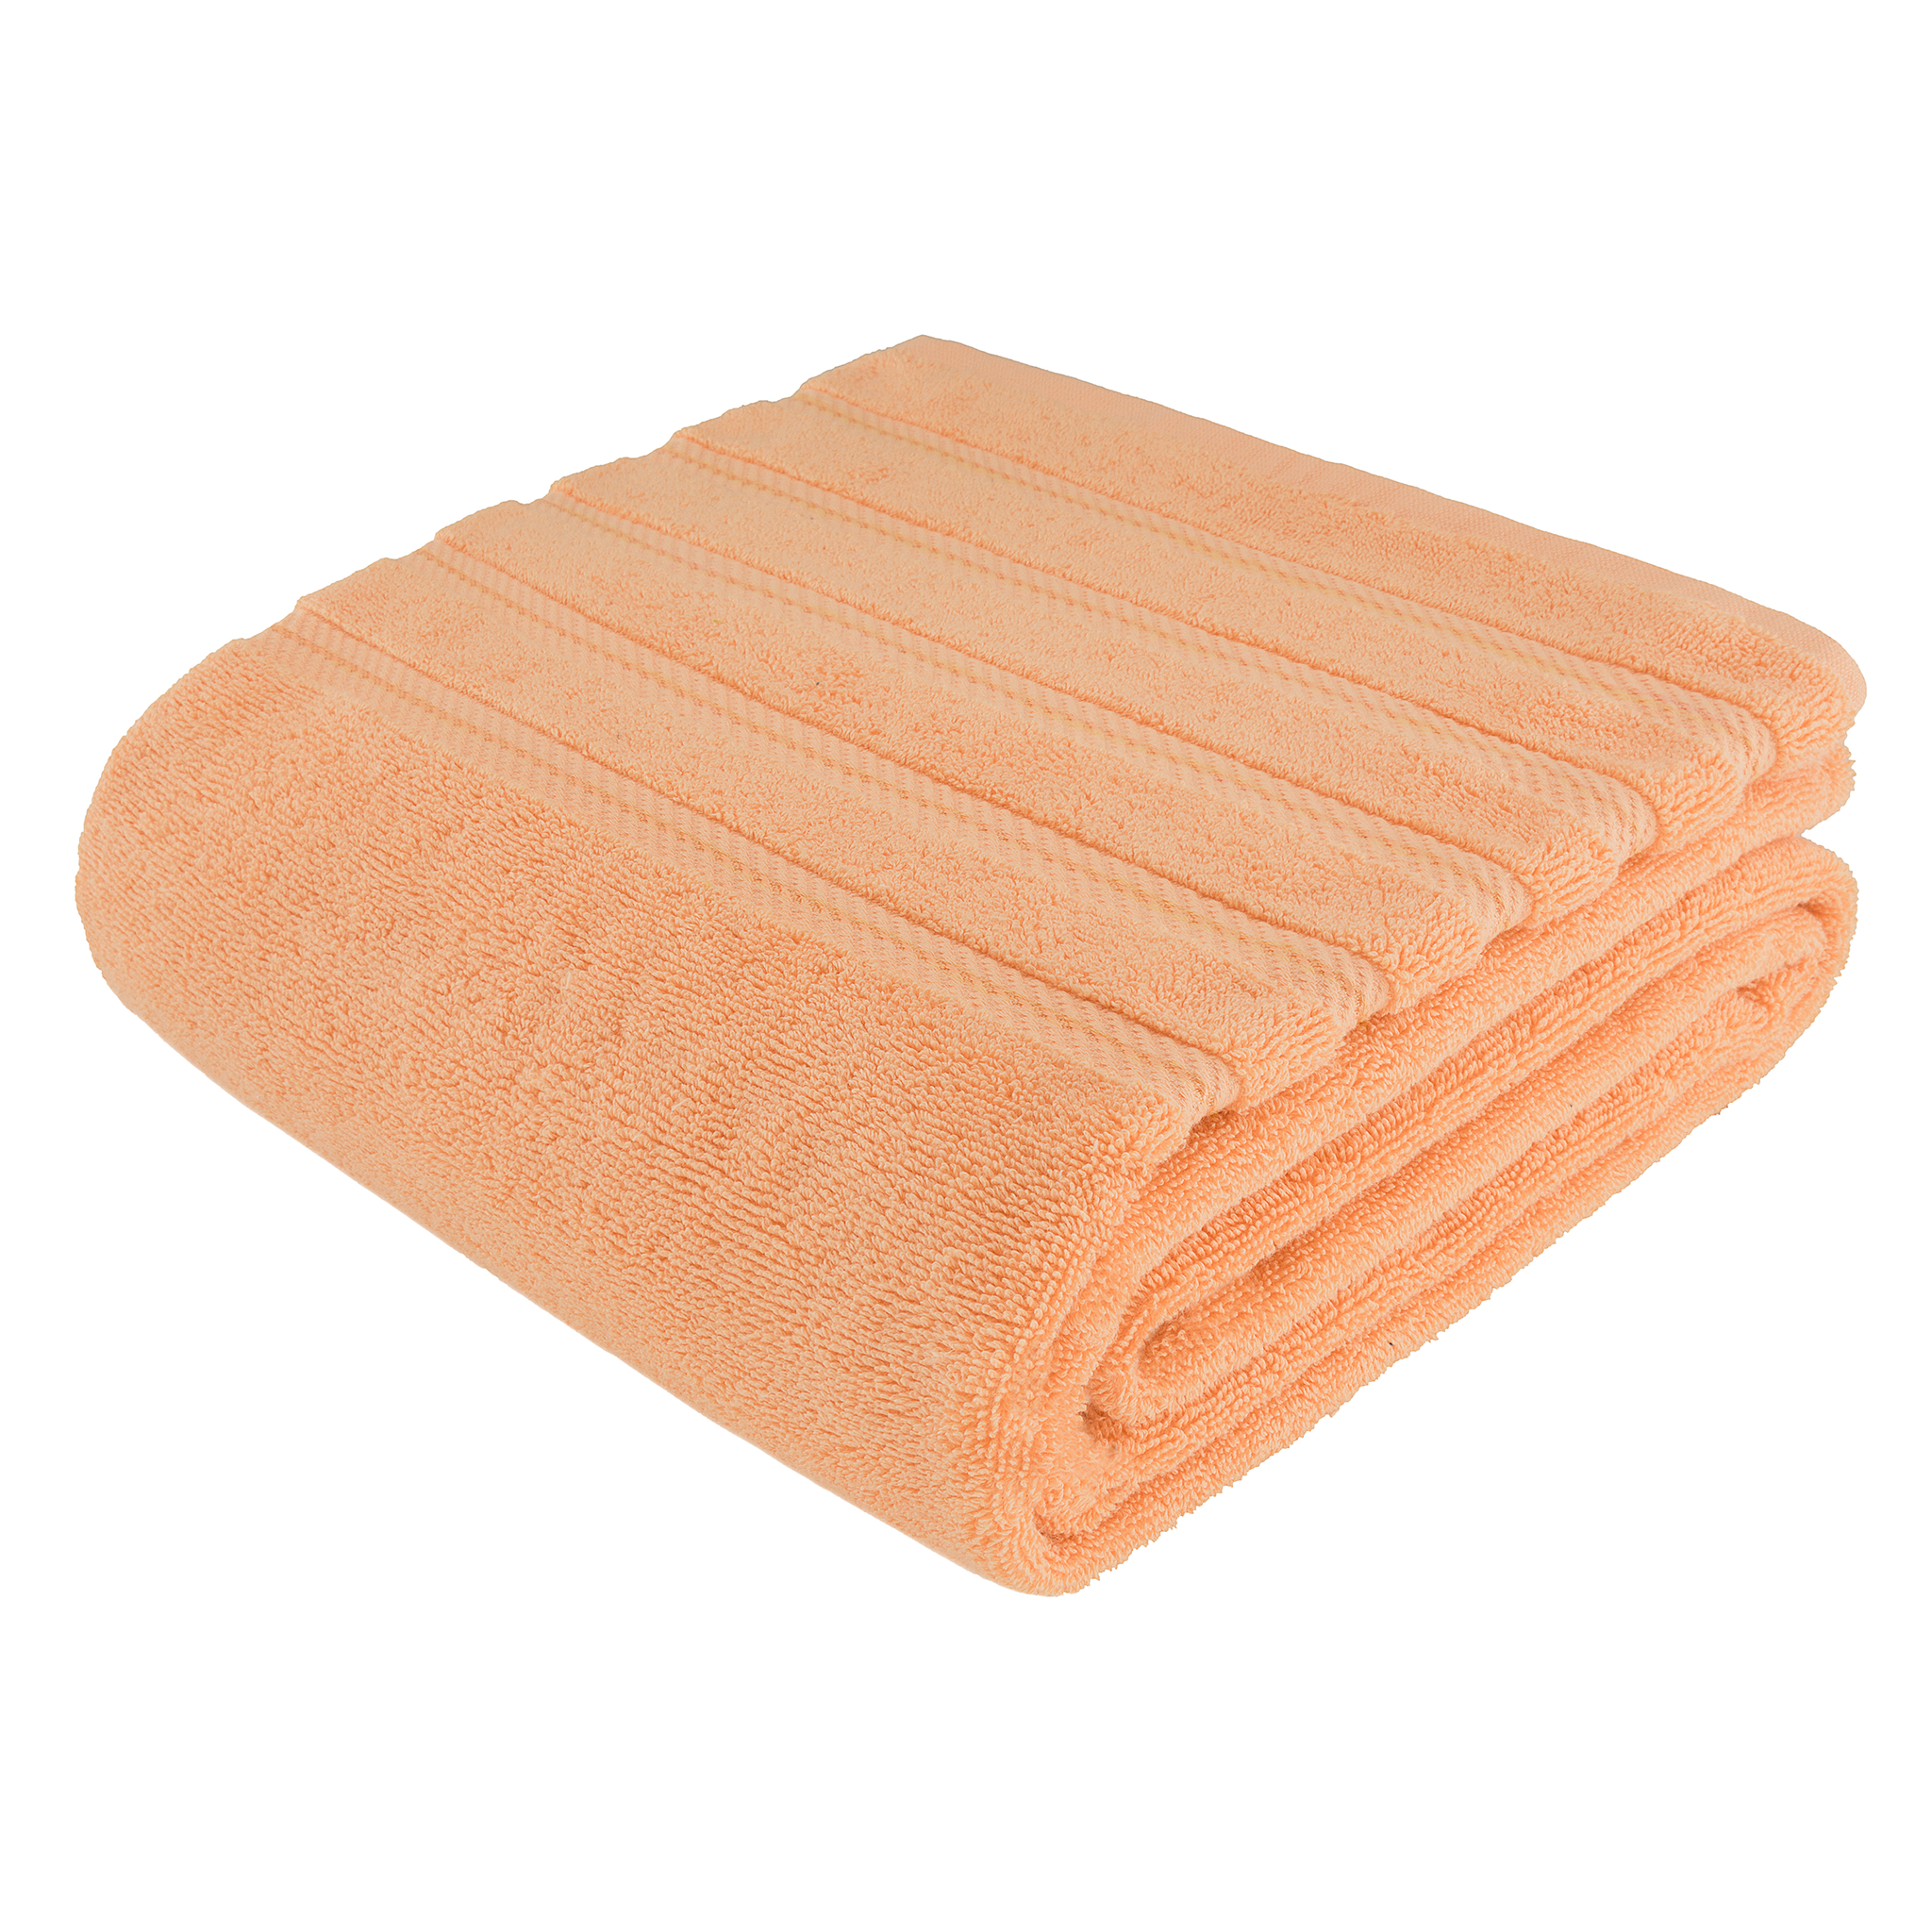 American Soft Linen - 35x70 Jumbo Bath Sheet Turkish Bath Towel - 16 Piece Case Pack - Malibu-Peach - 7